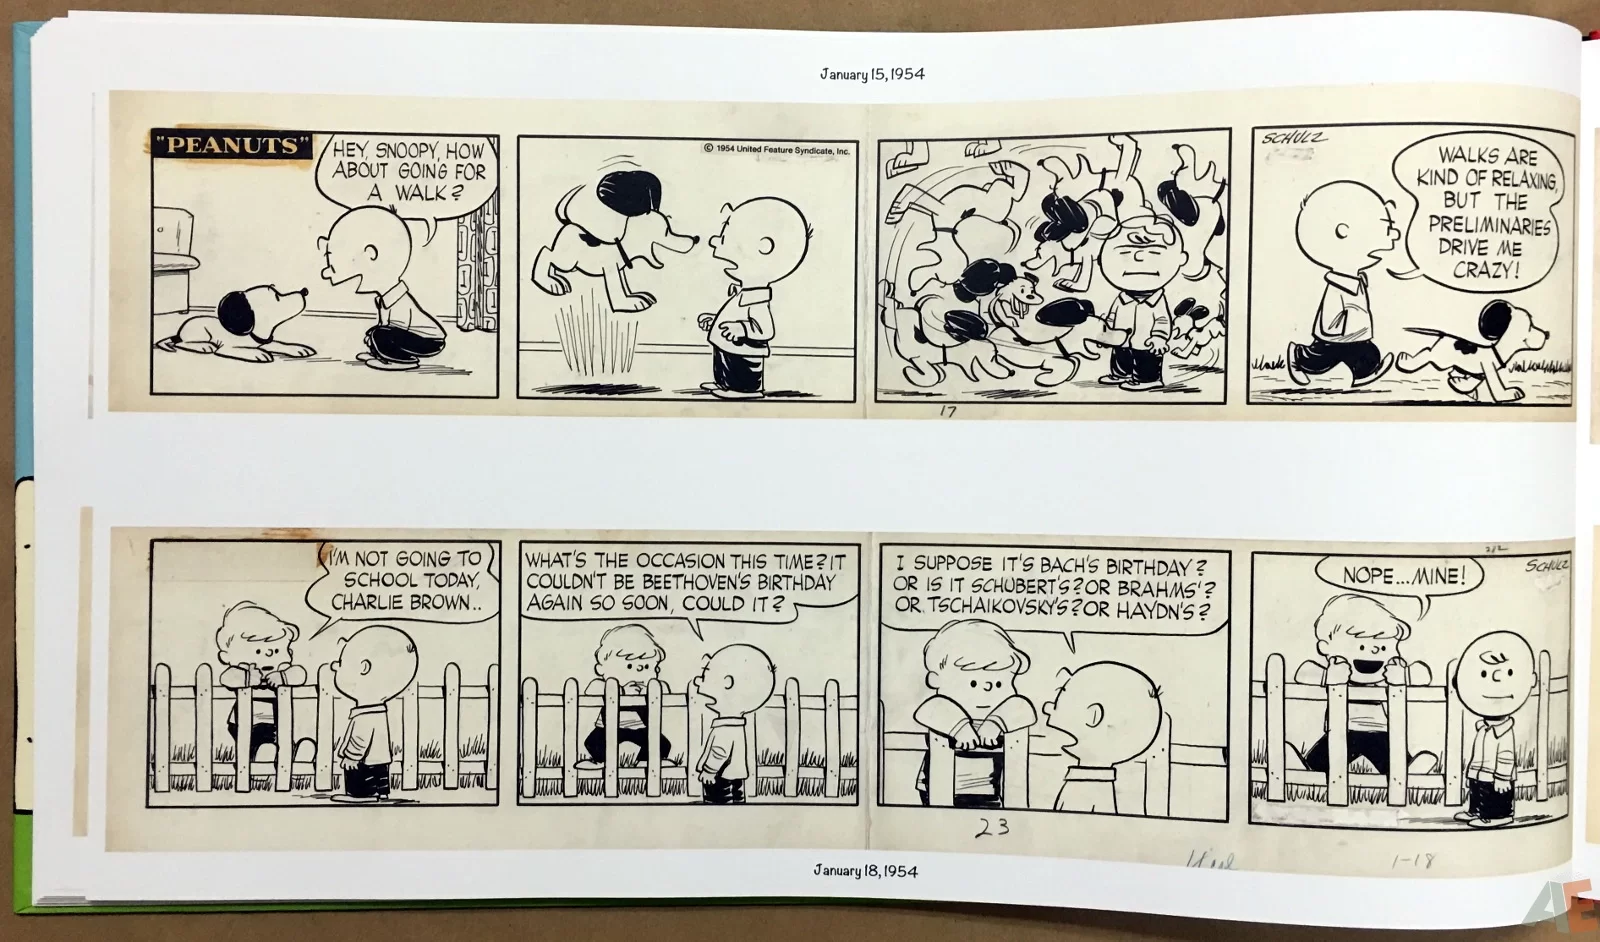 Charles M. Schulz Peanuts Artist’s Edition